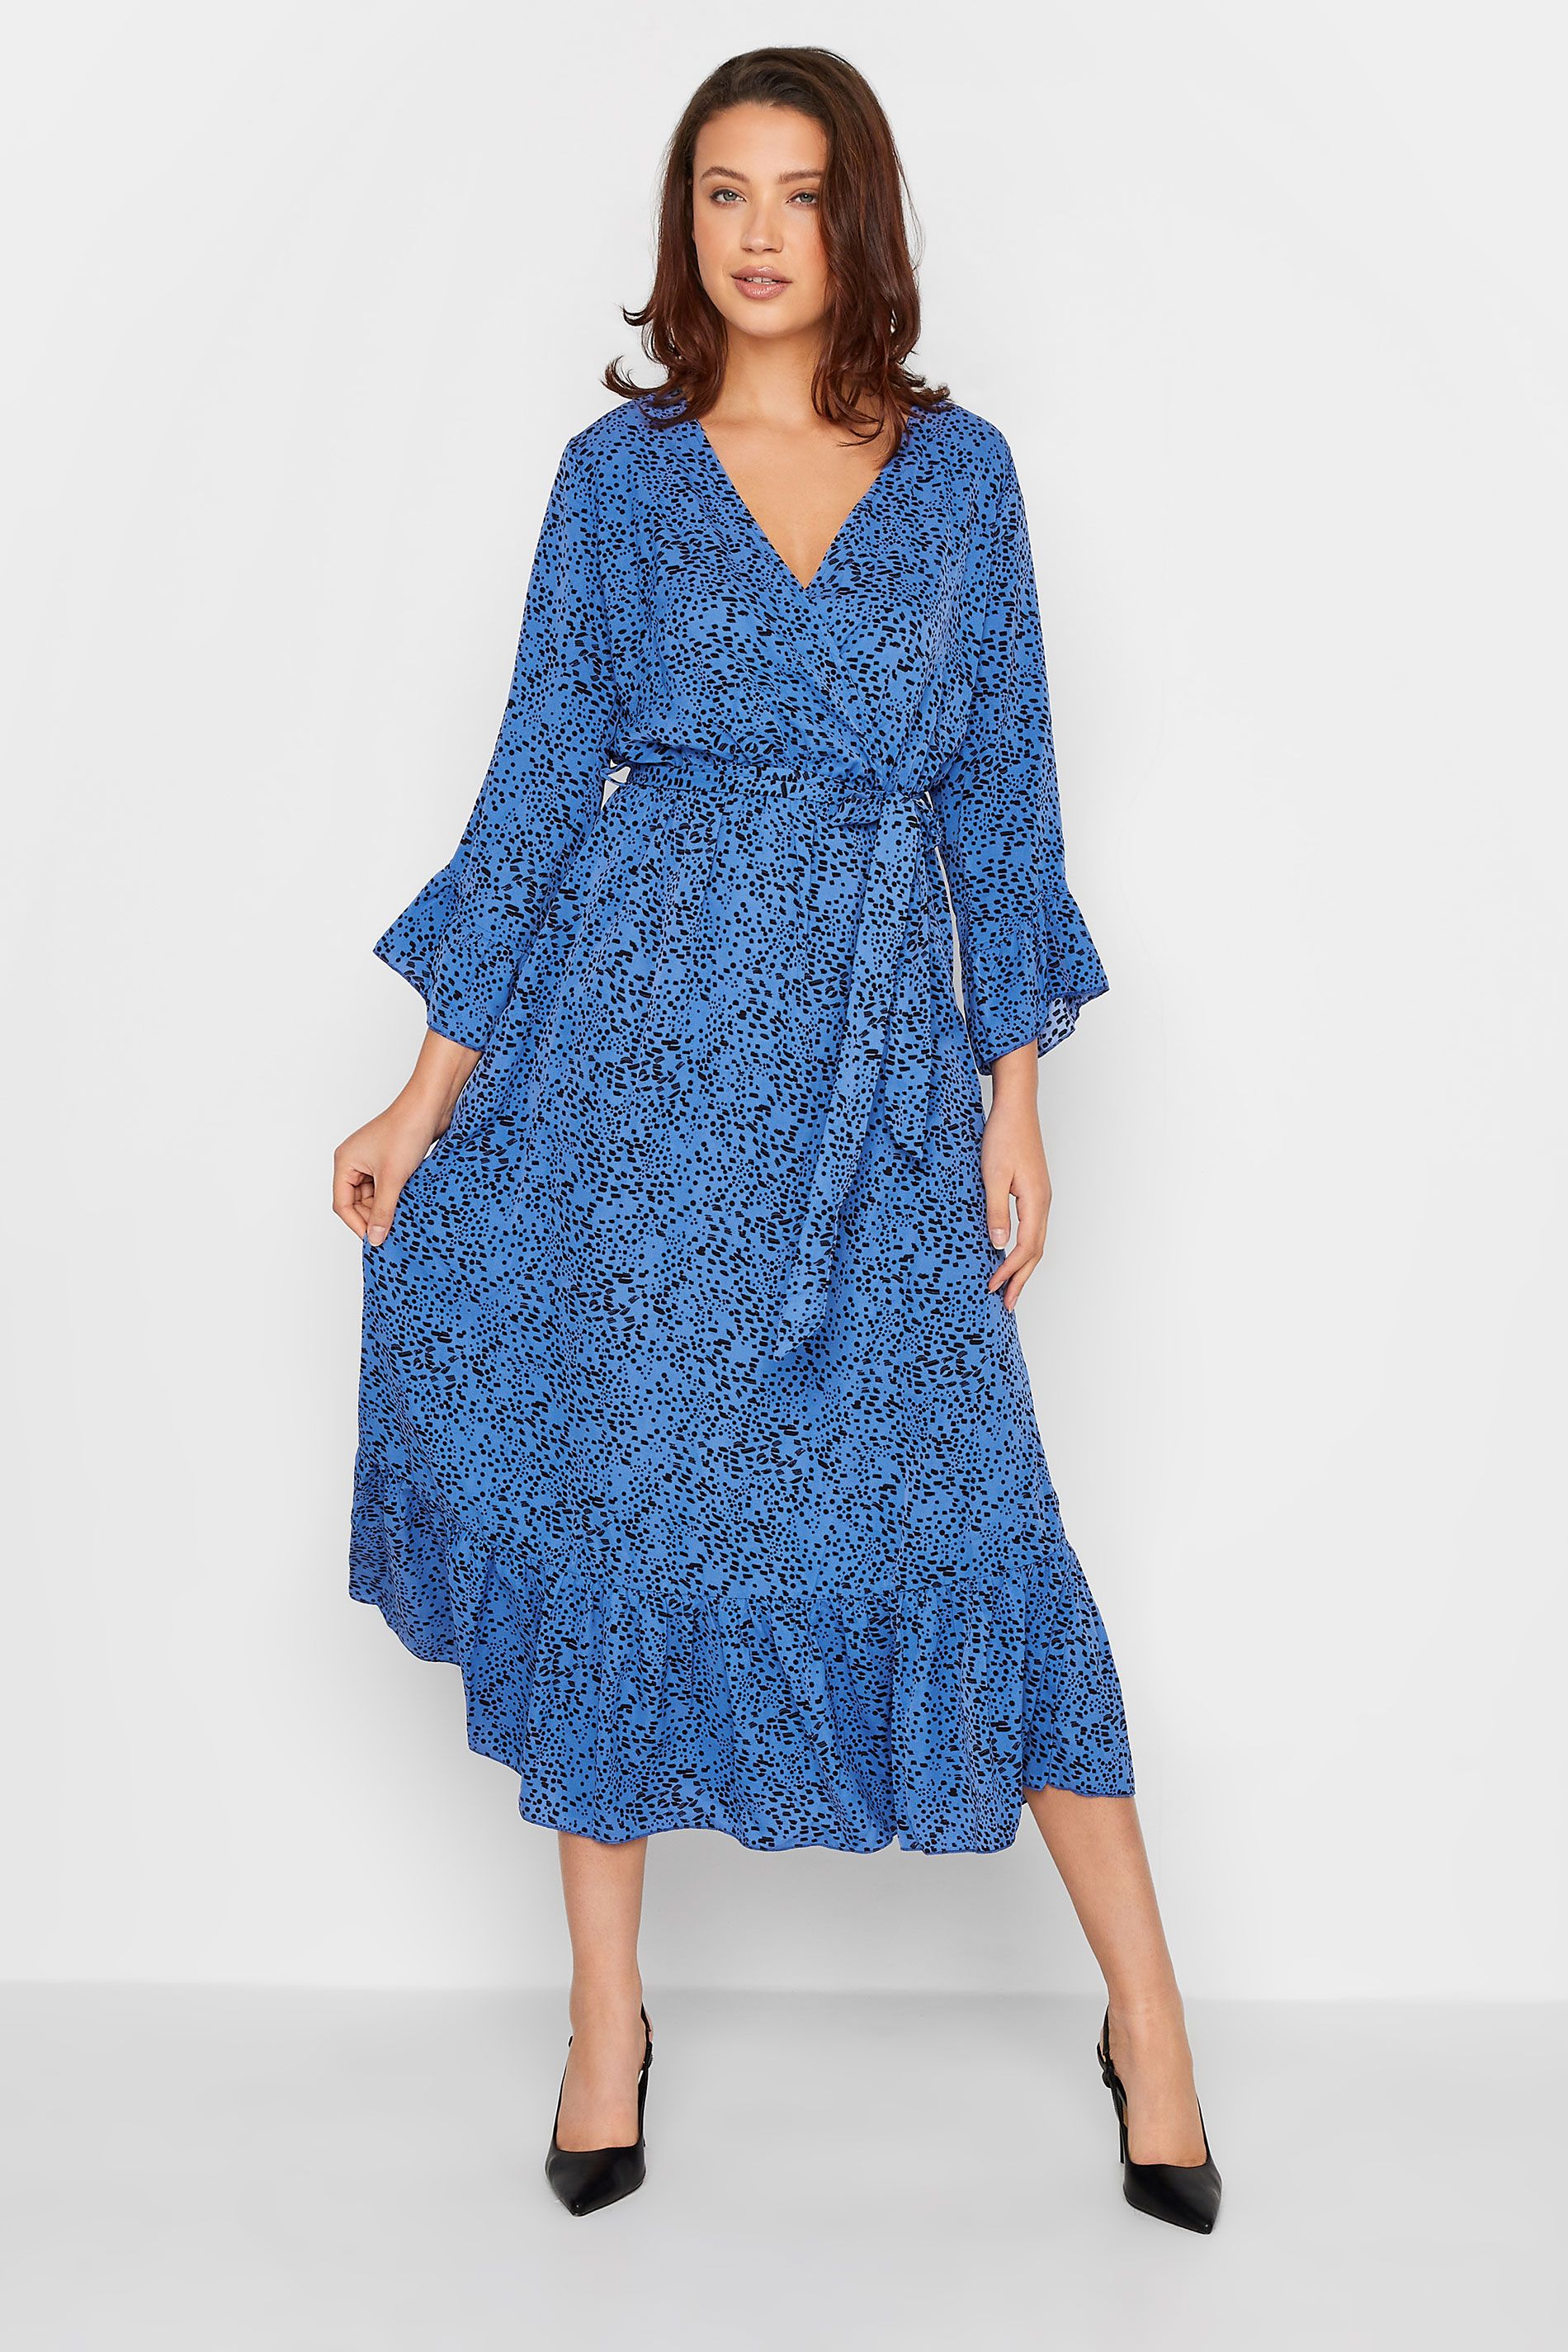 LTS Tall Cobalt Blue Dalmatian Print Wrap Dress | Long Tall Sally